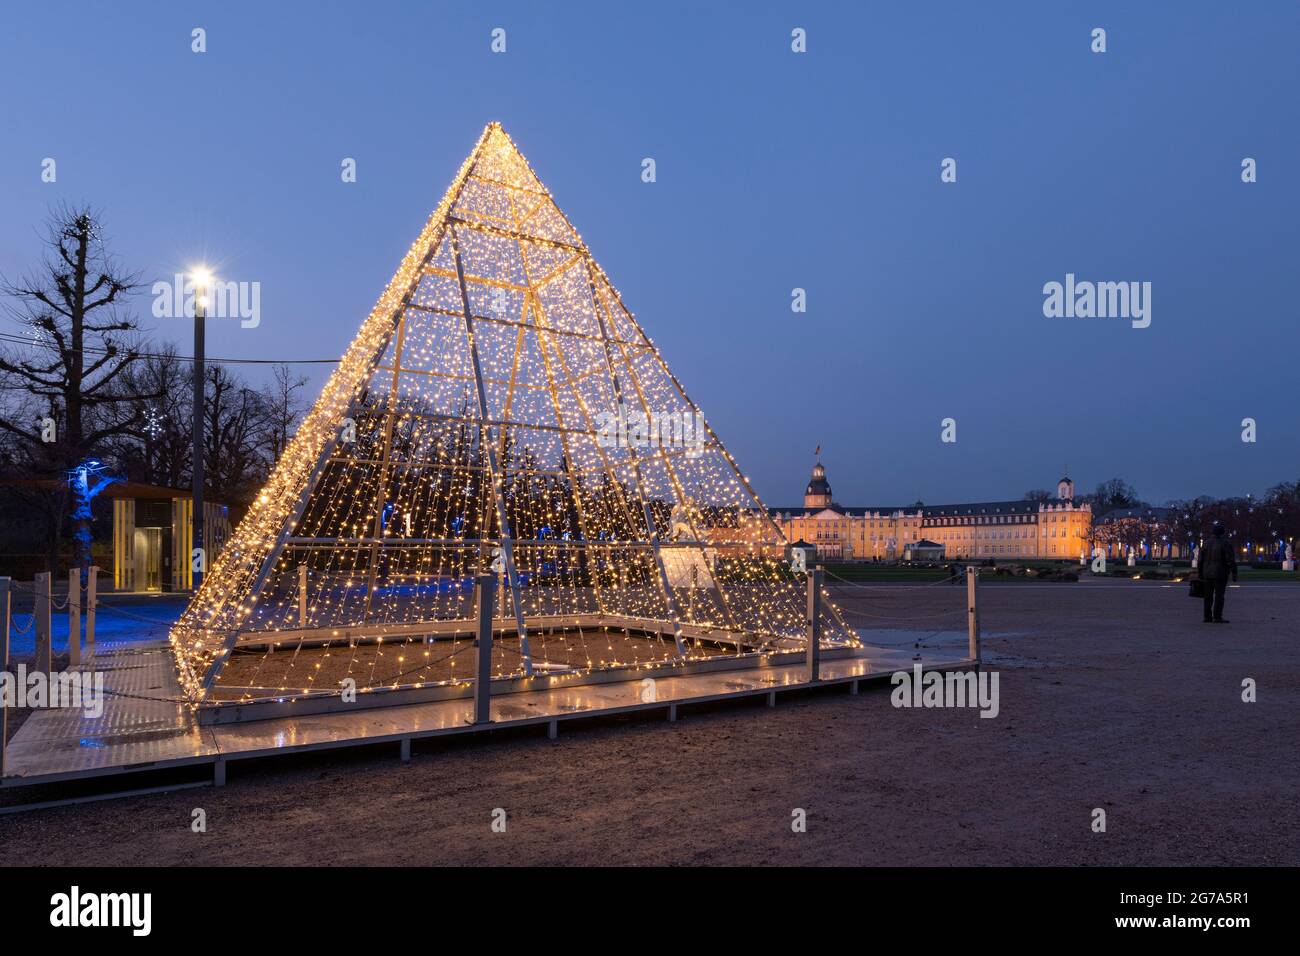 Allemagne, Bade-Wurtemberg, Karlsruhe, pyramide de Noël devant le château. Banque D'Images